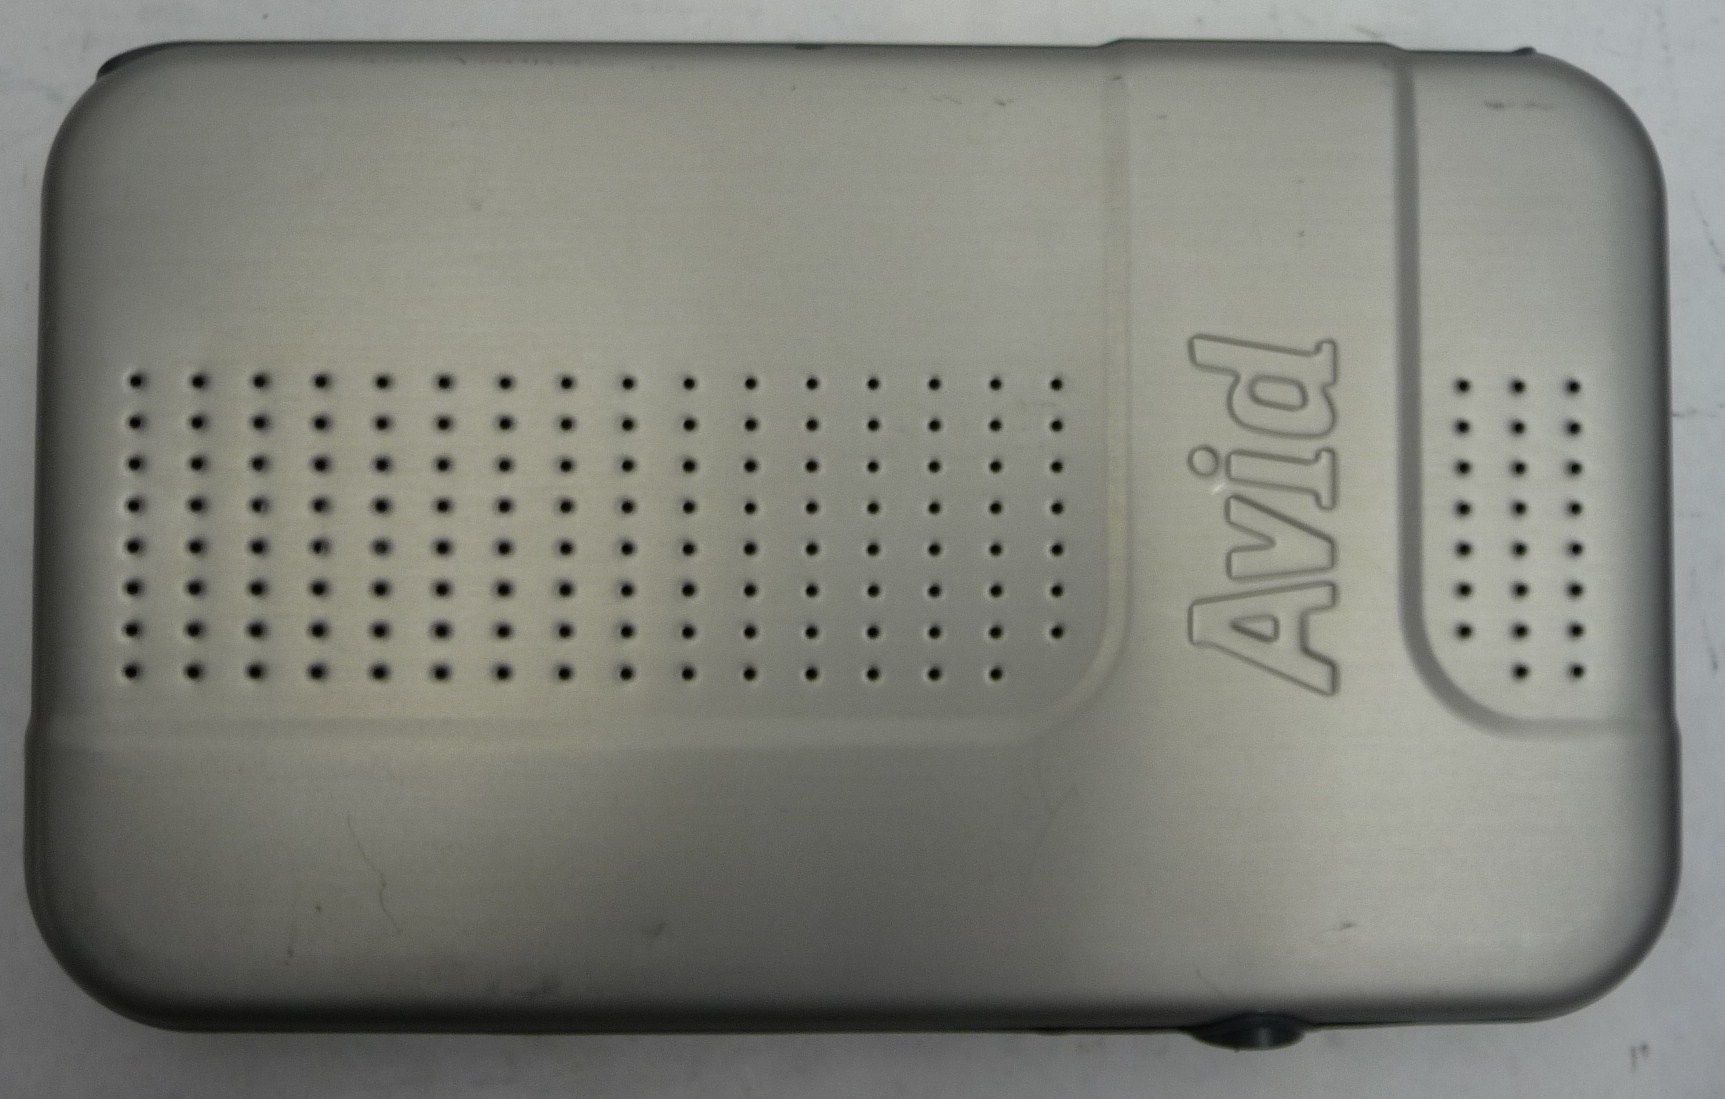  DNA 0020 03250 01 RCA FIREWIRE DIGITAL NONLINEAR ACCELERATOR CONVERTER